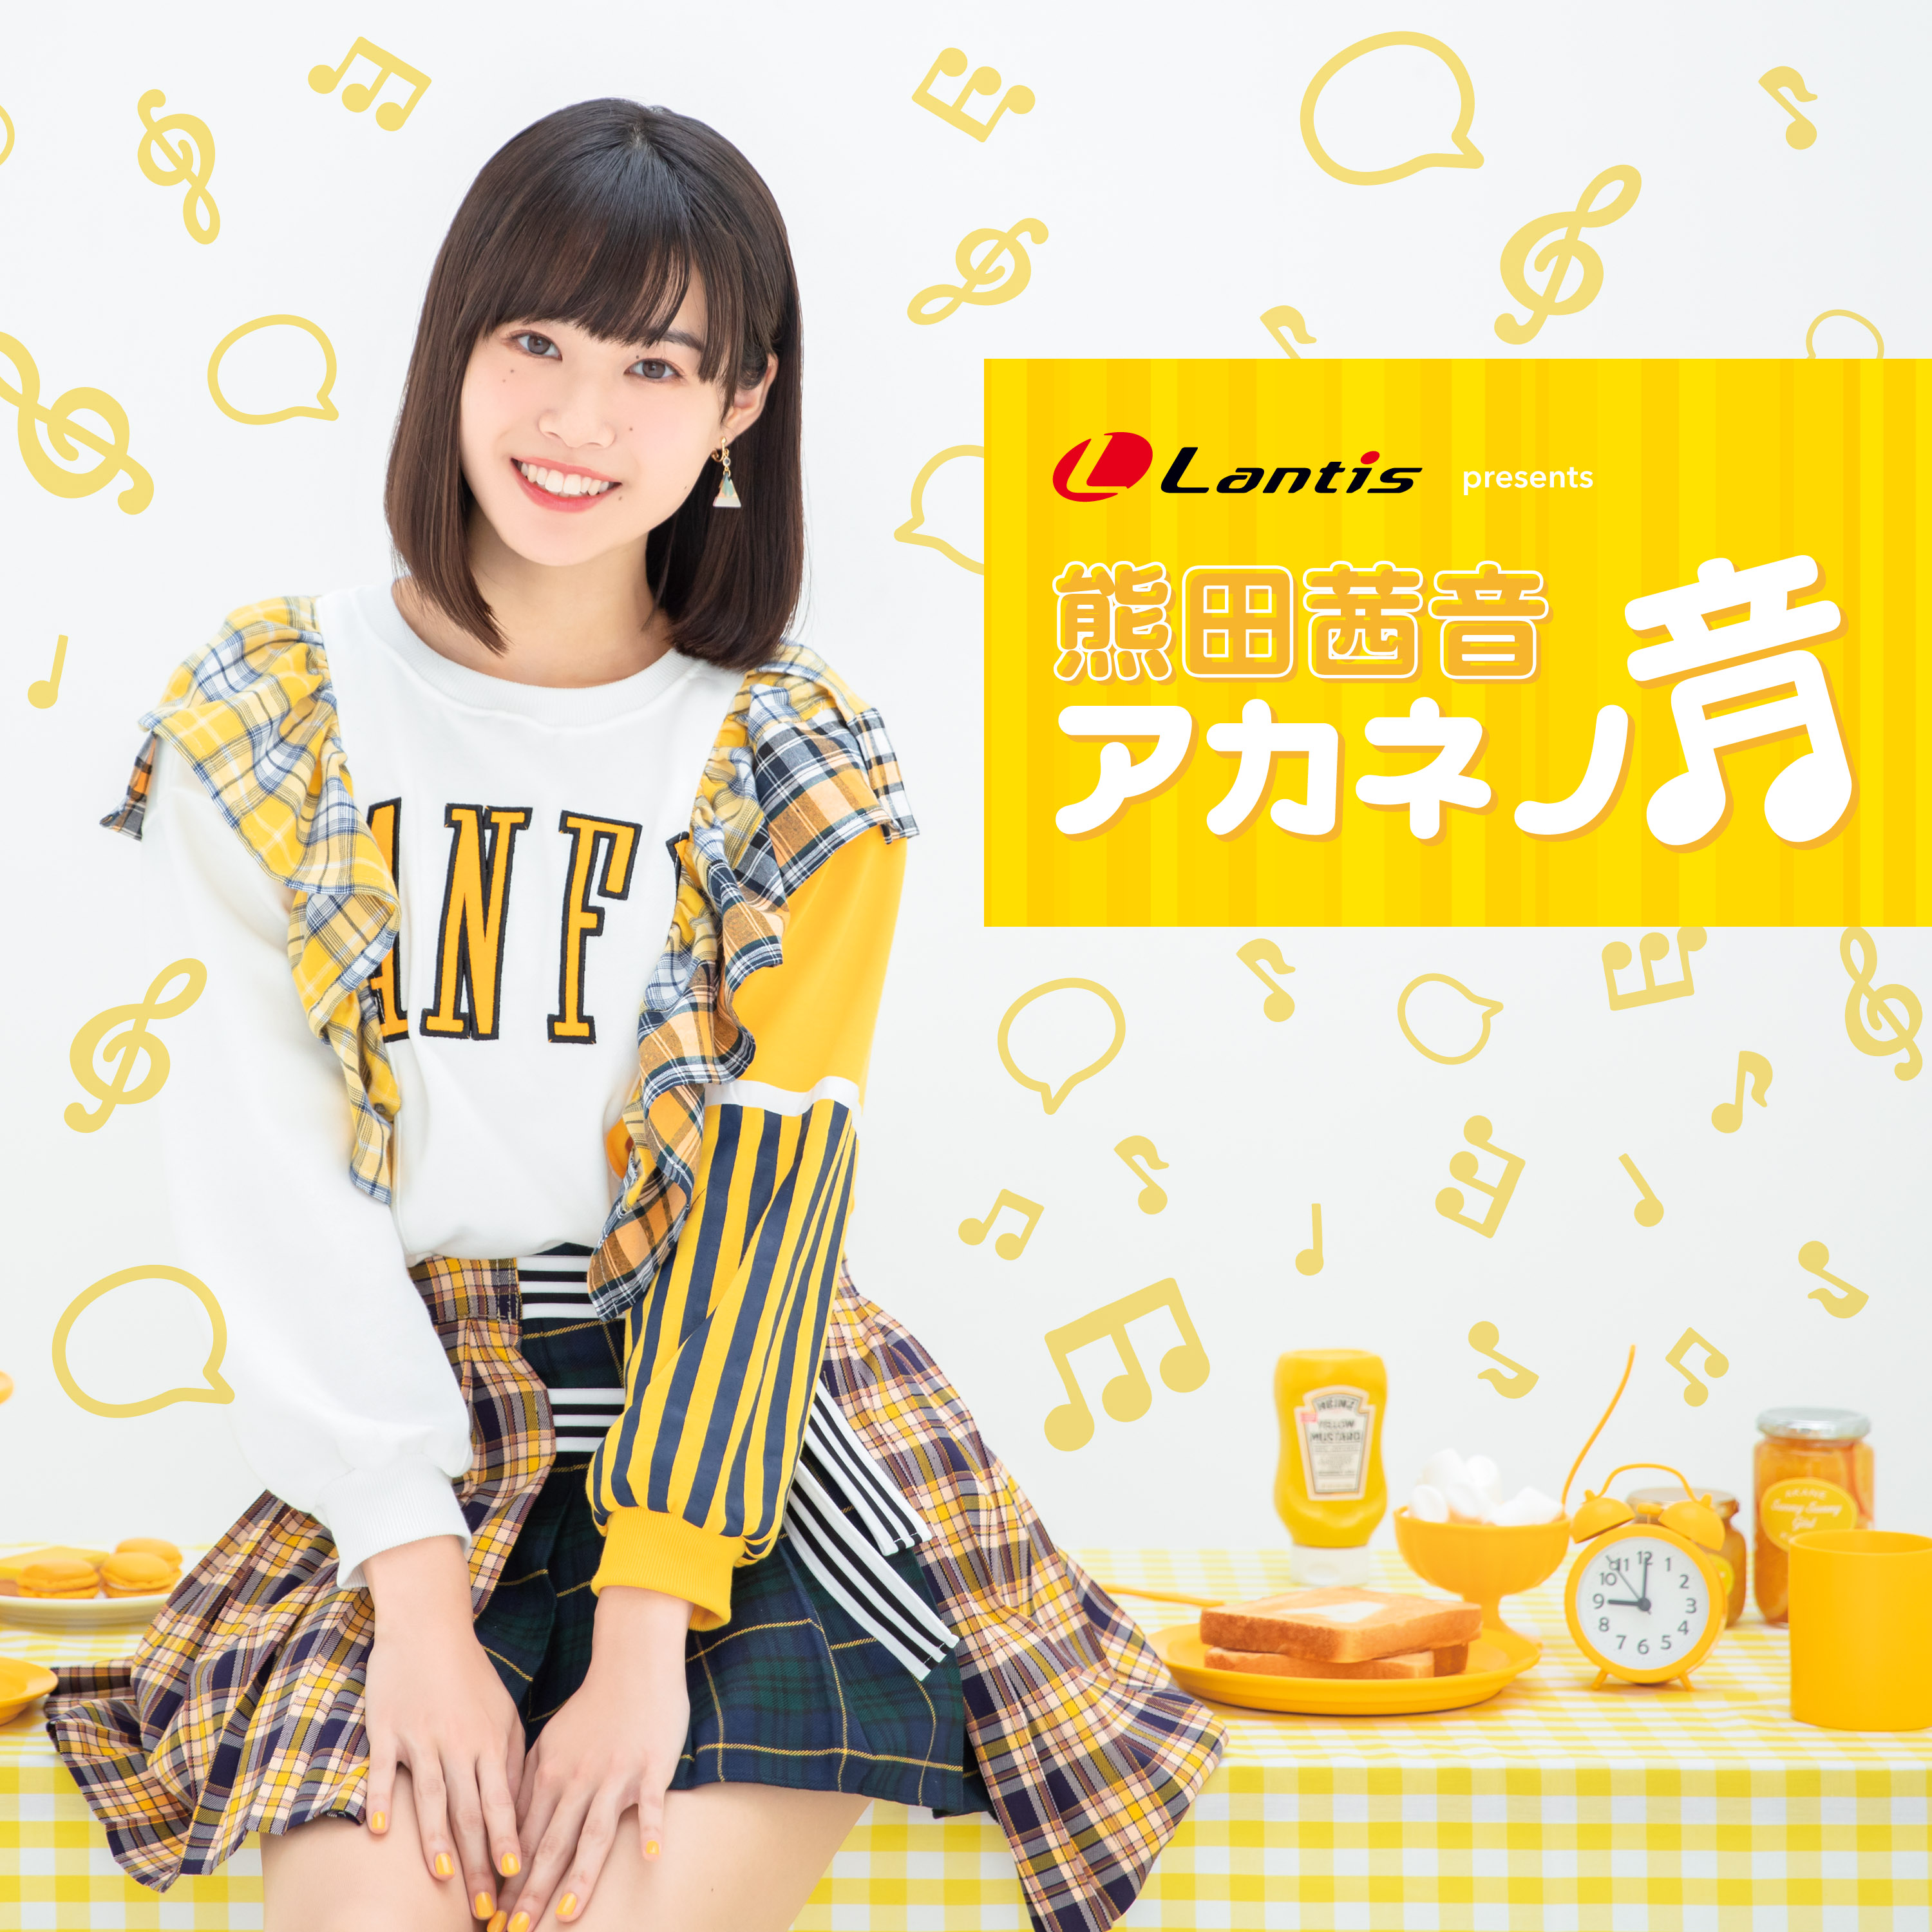 Lantis Presents 熊田茜音 アカネノ音 #299-302